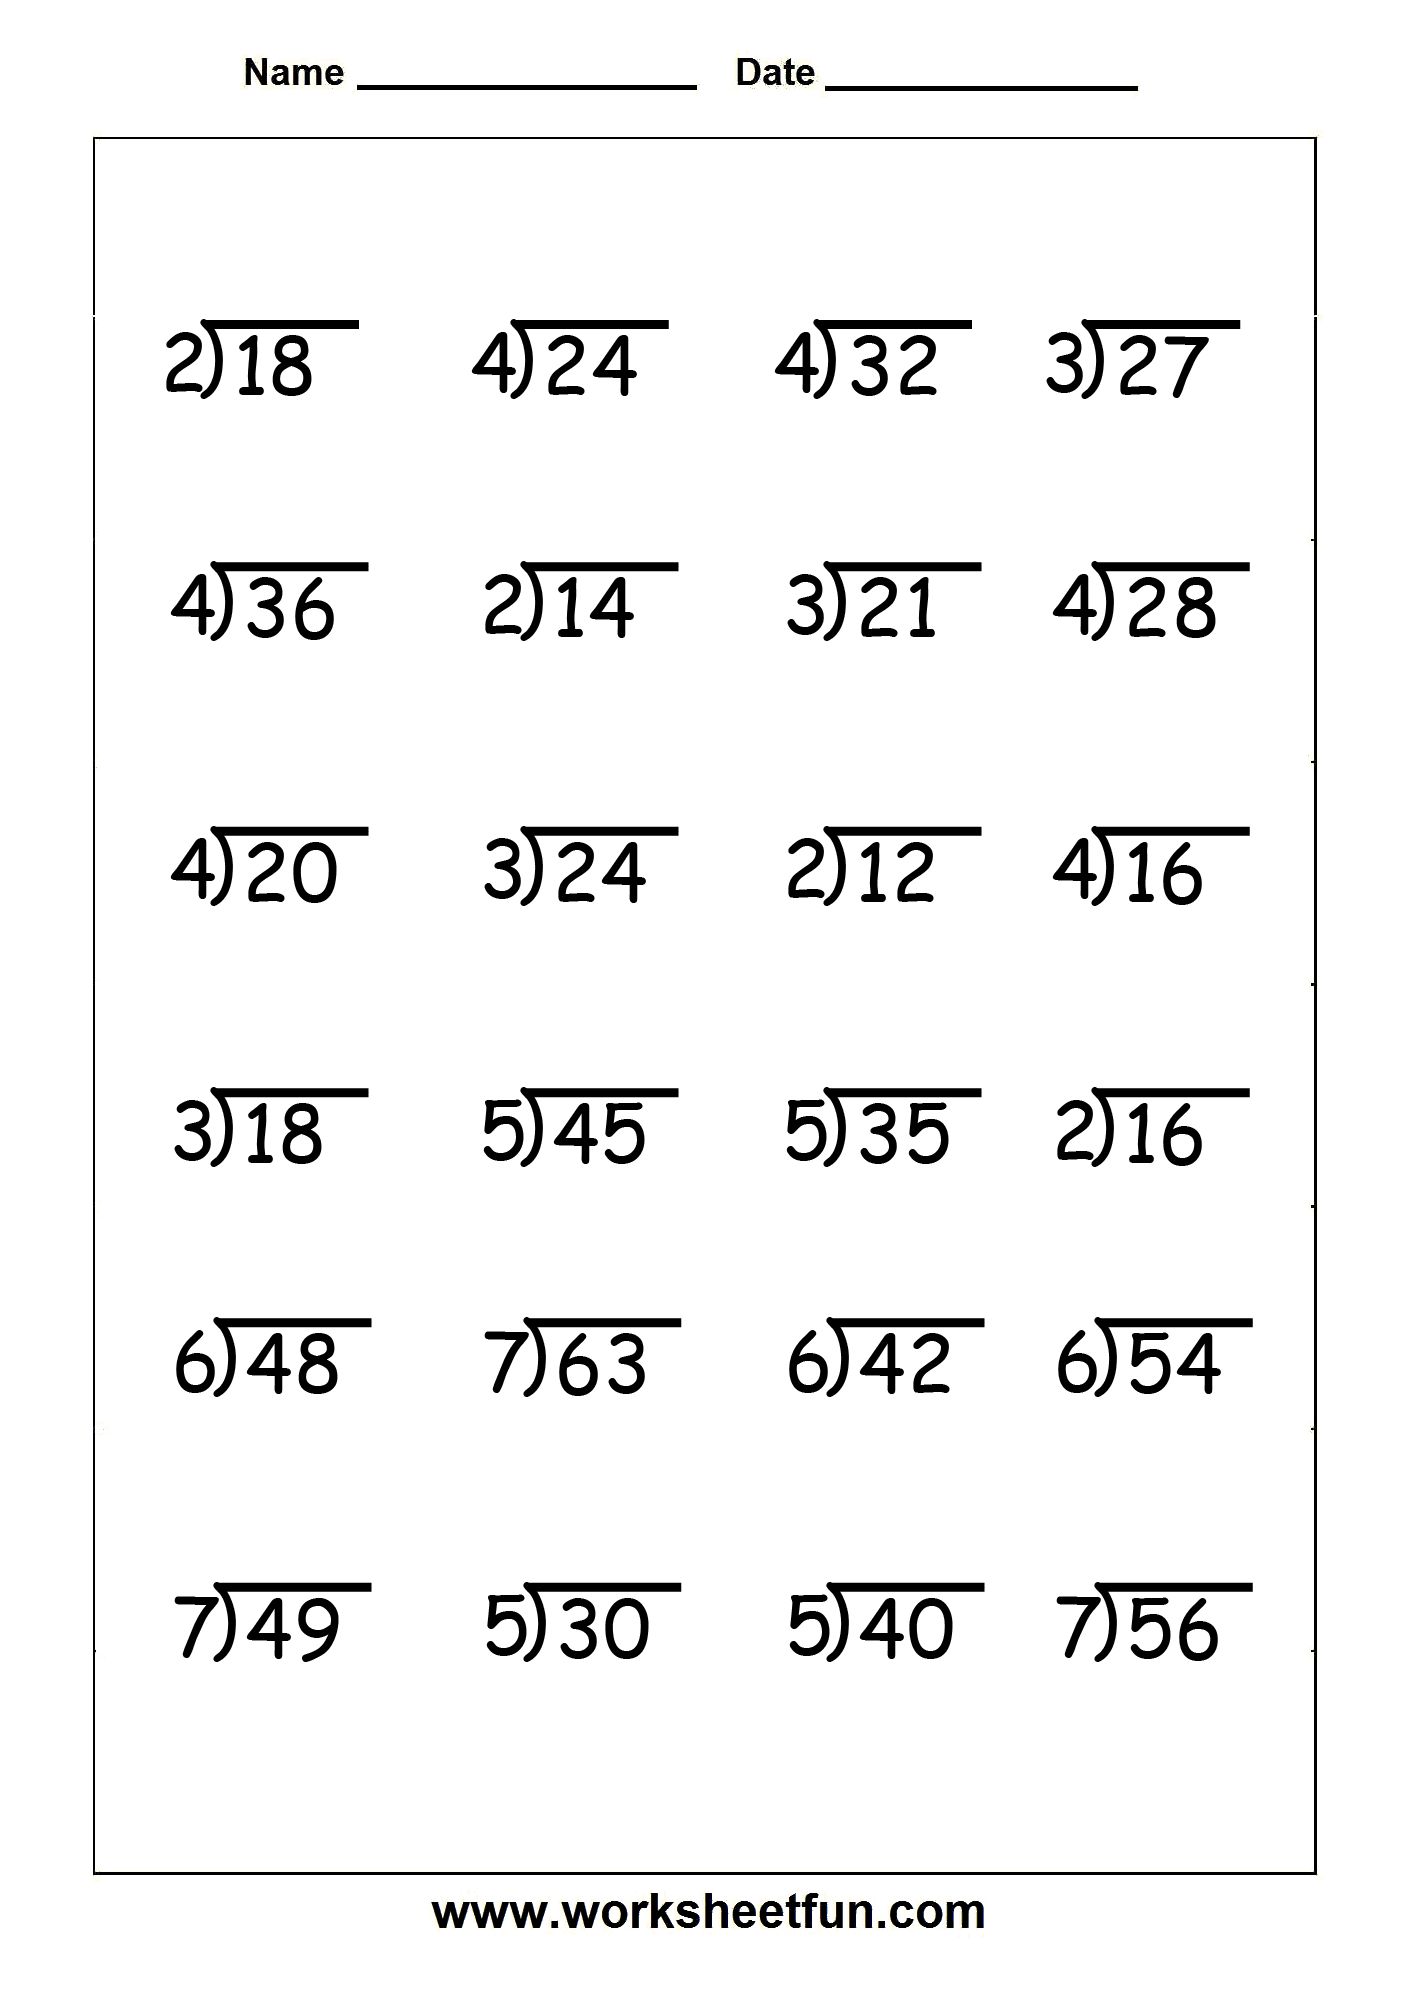 Division 4 Worksheets Free printable math worksheets, Division